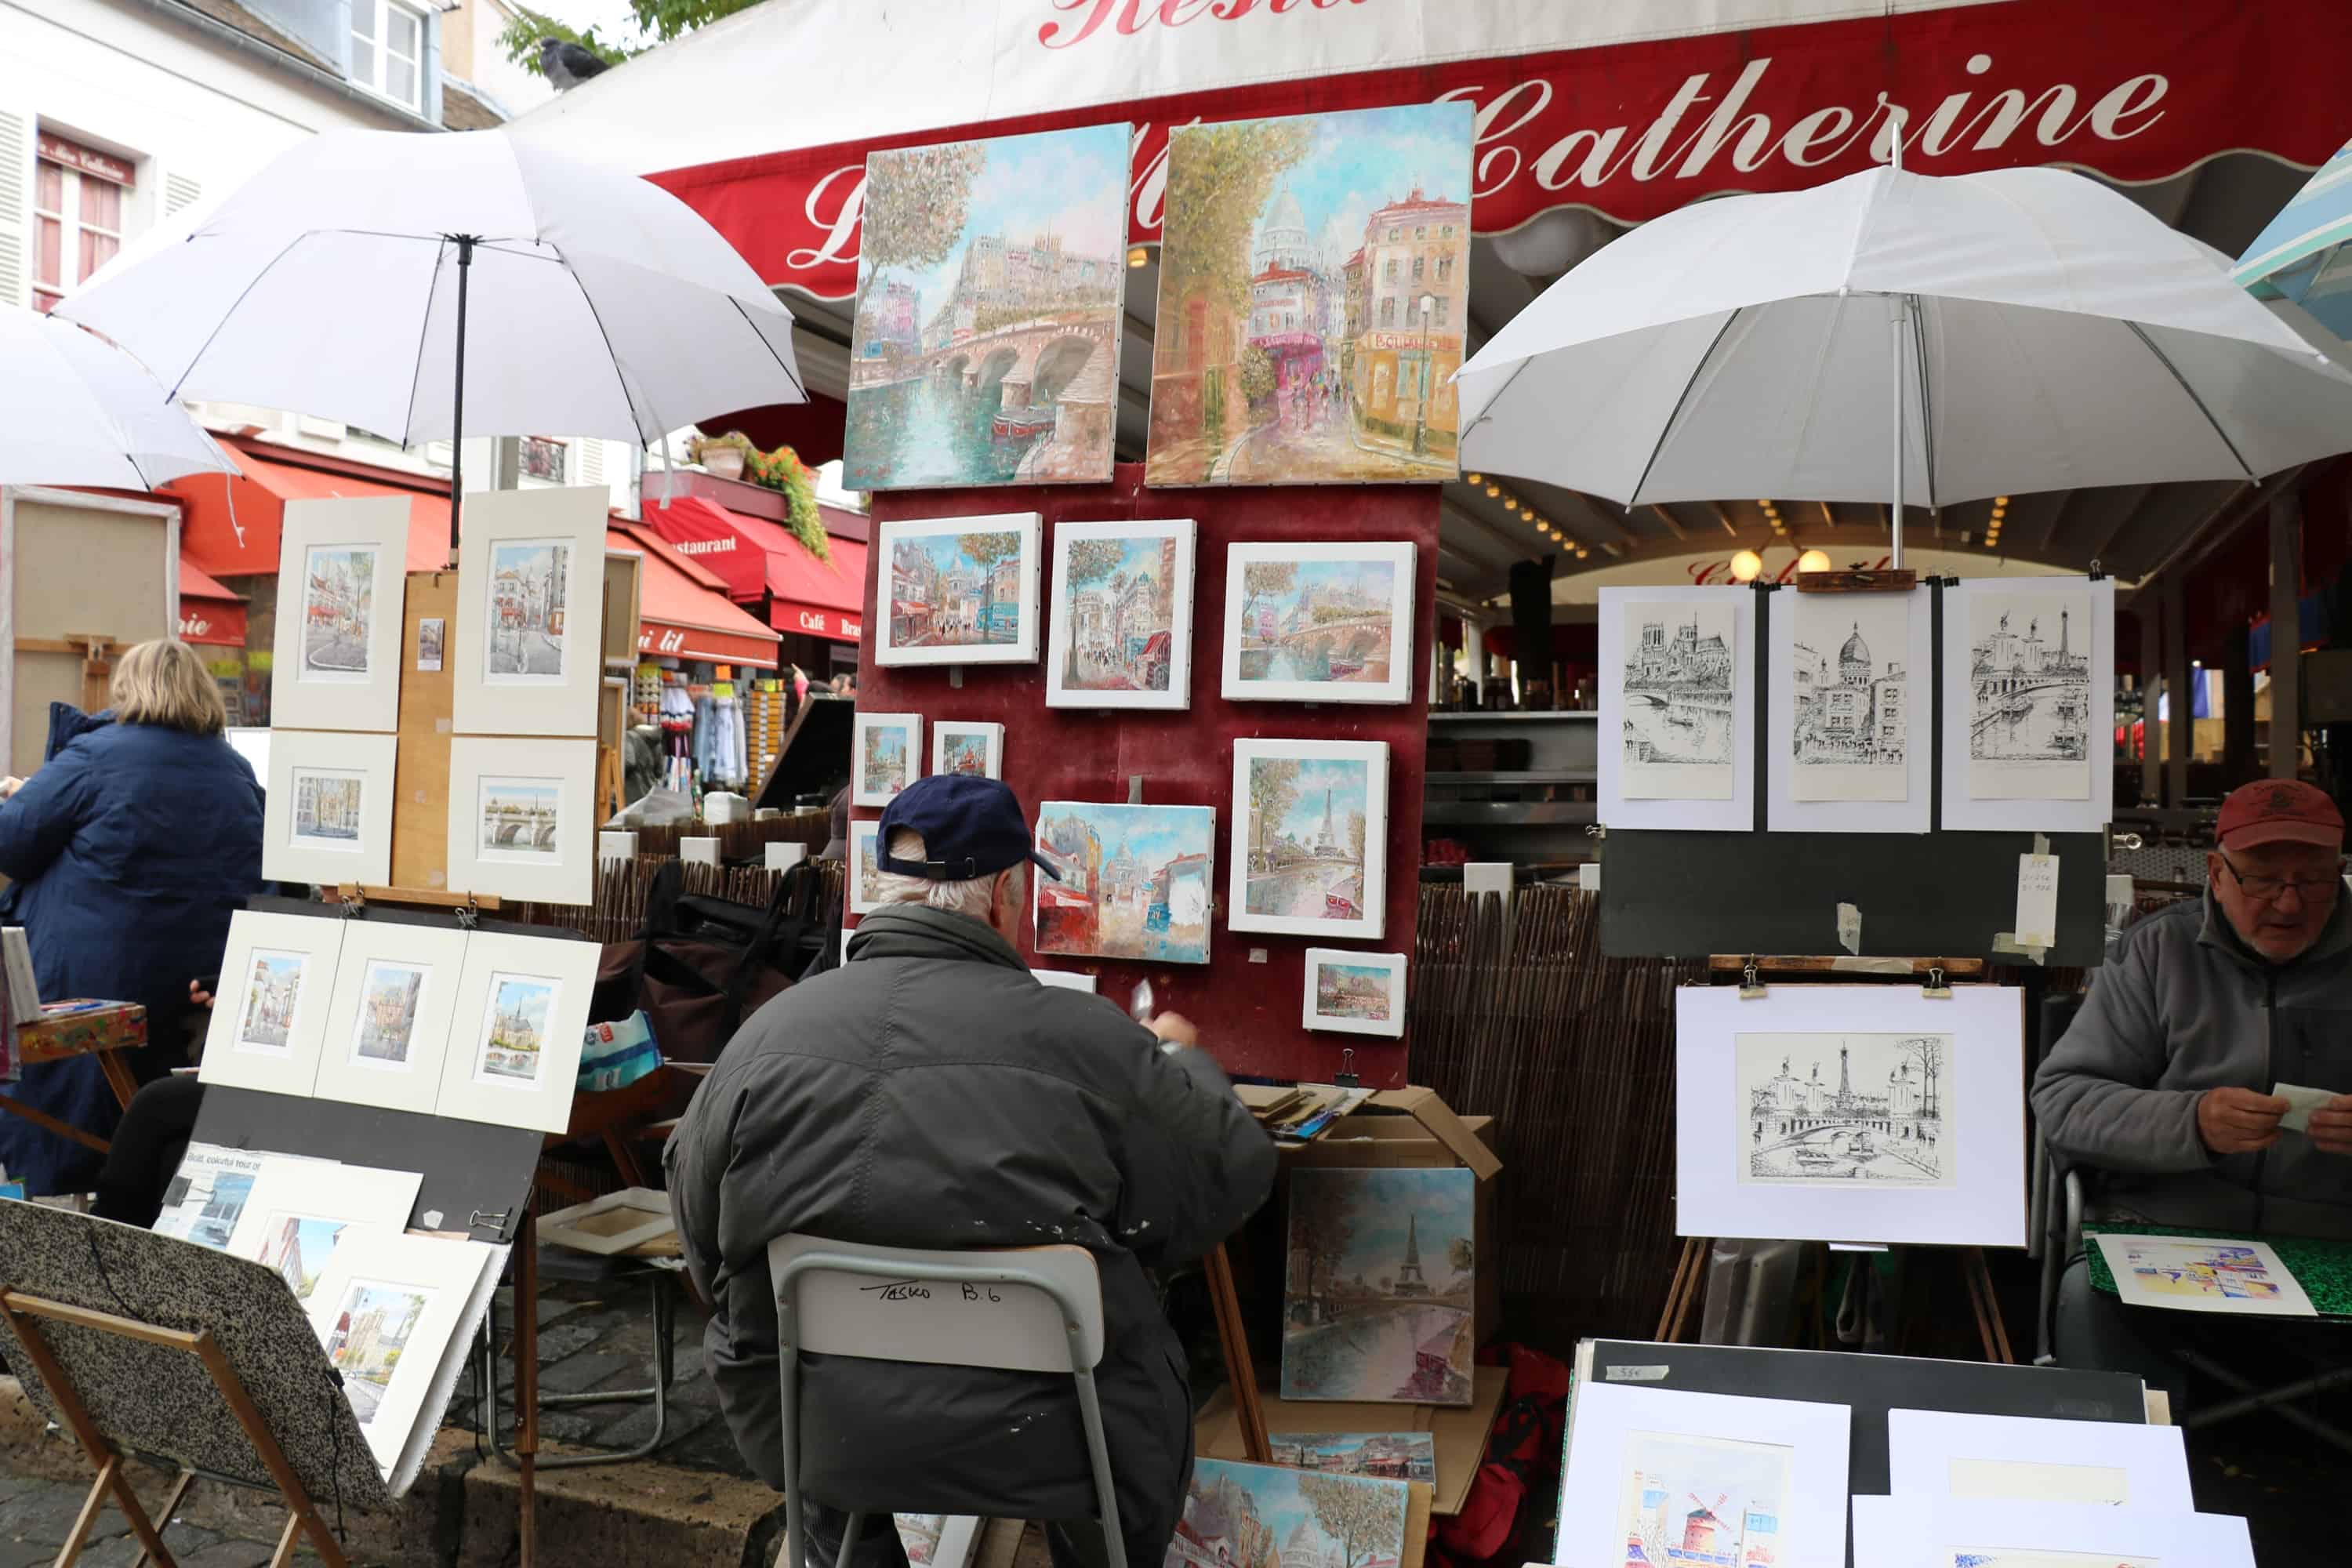 Montmartre is famous for art